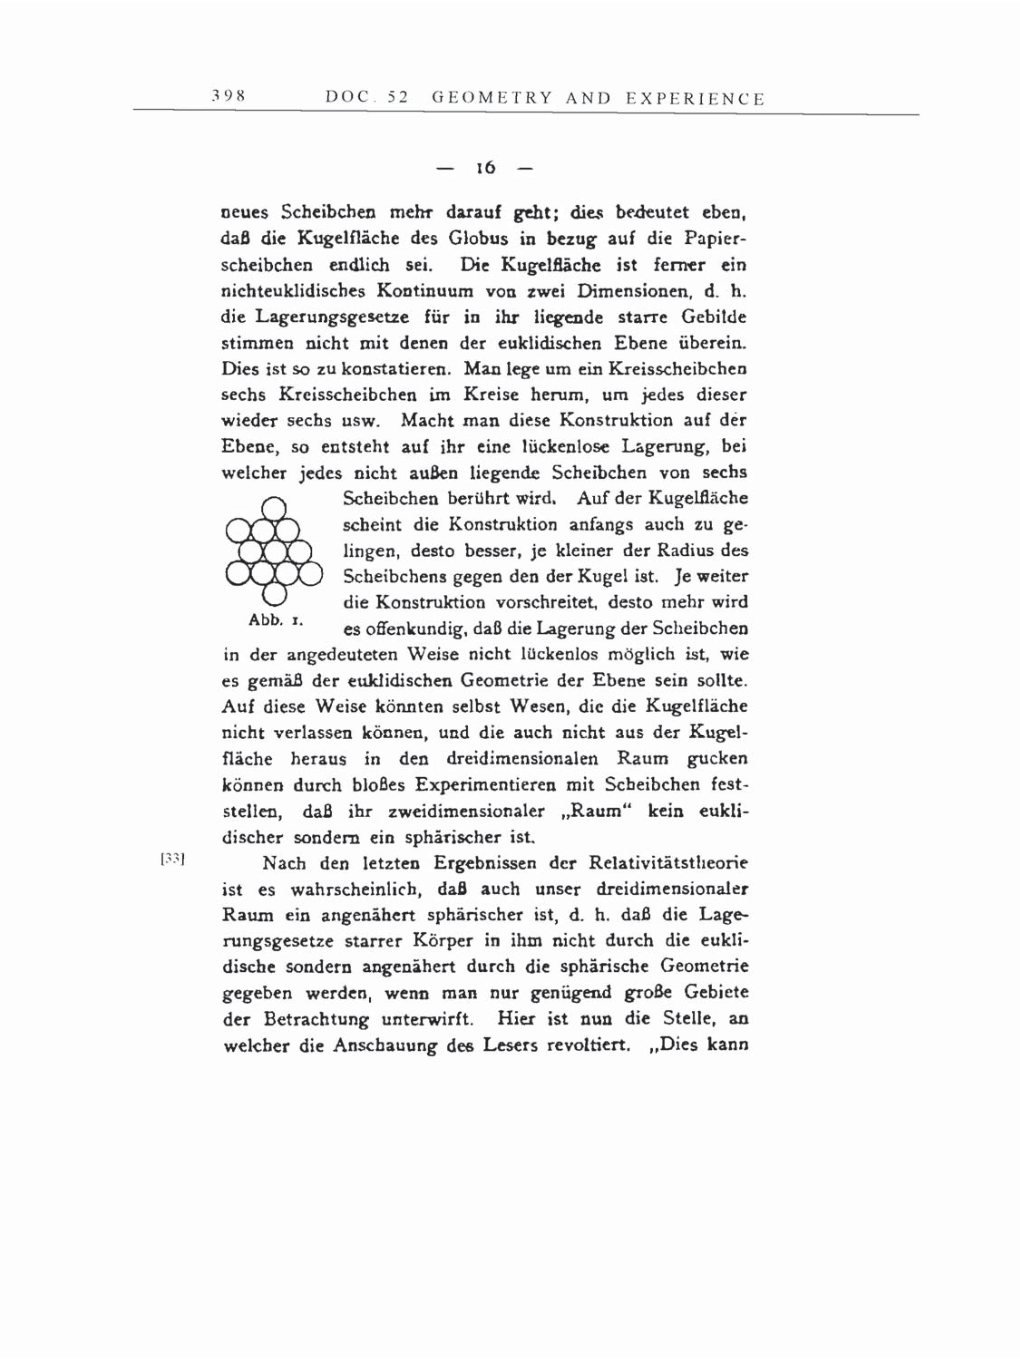 Volume 7: The Berlin Years: Writings, 1918-1921 page 398